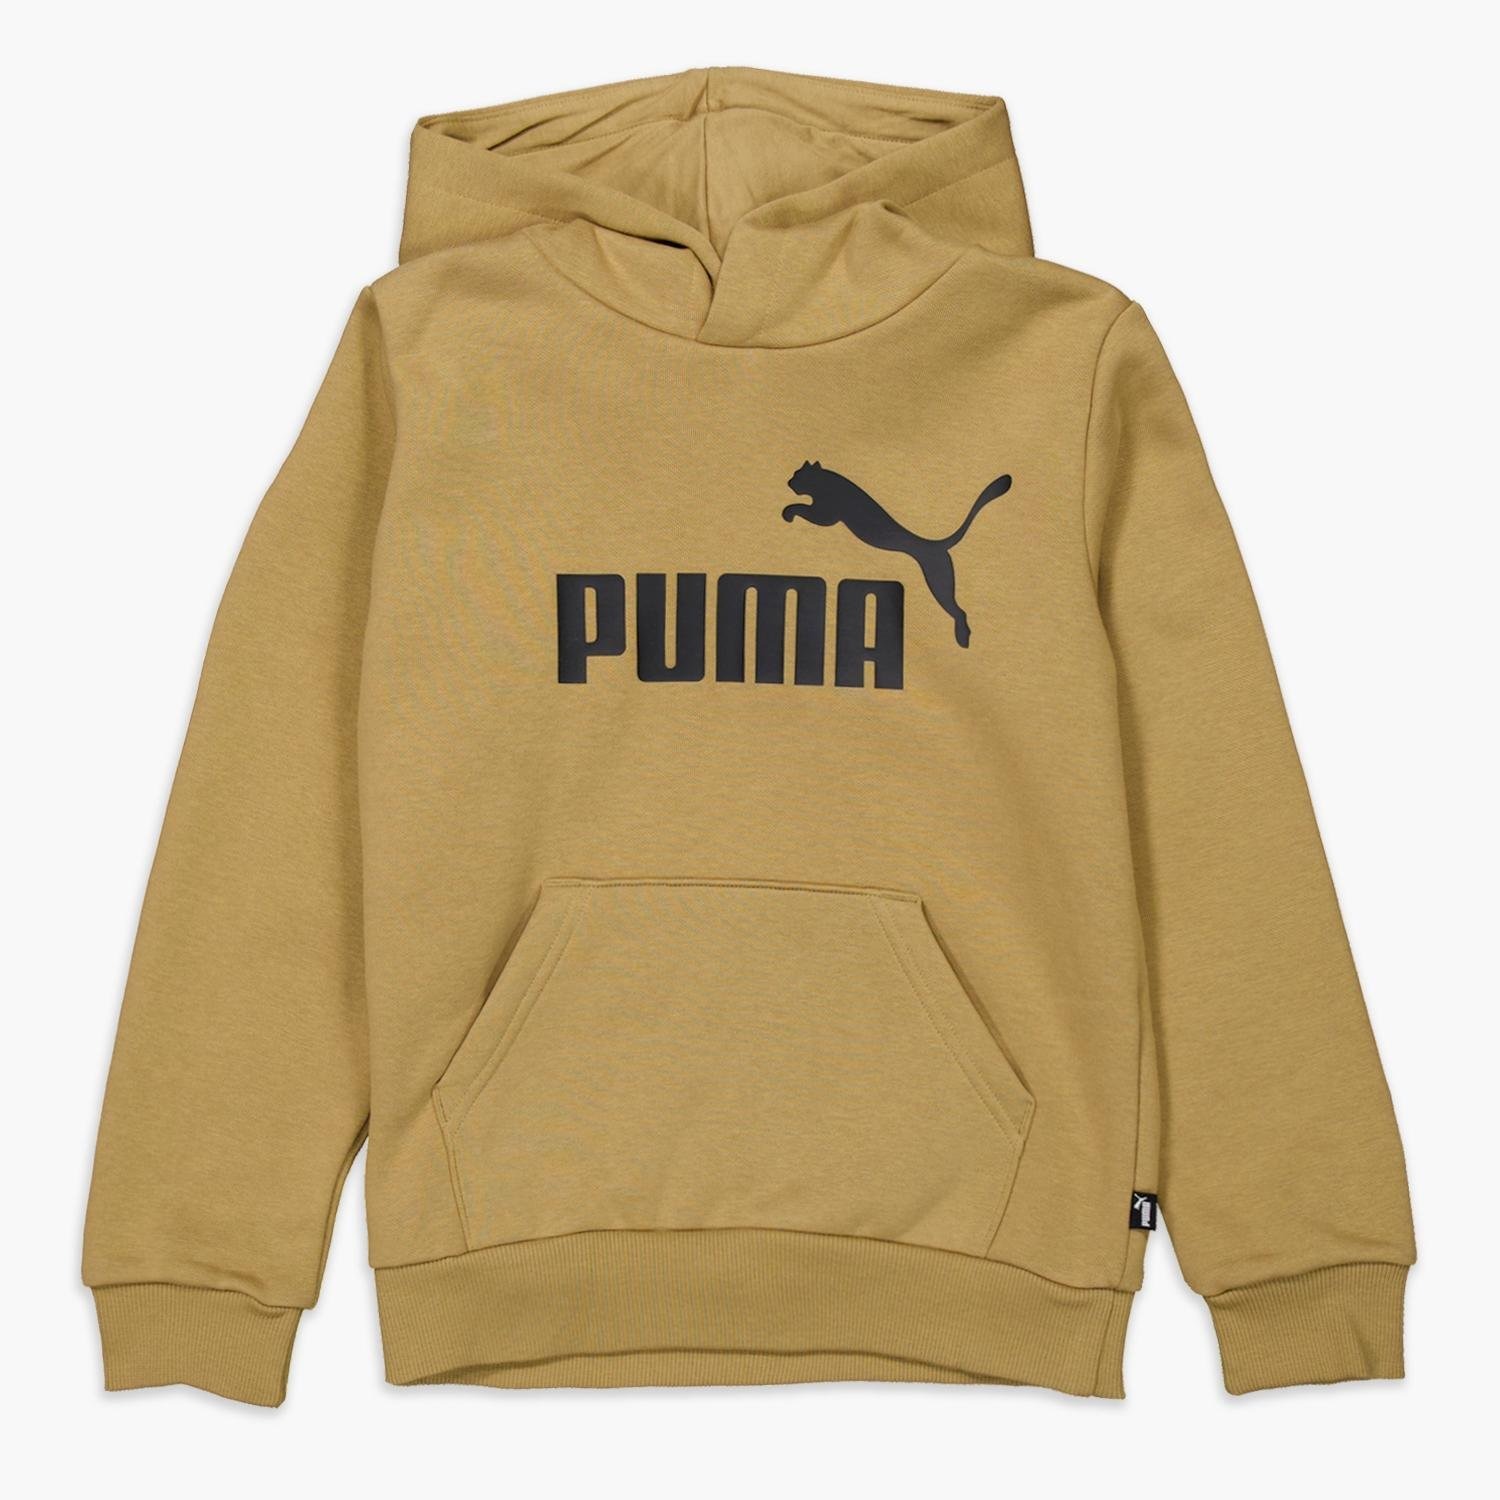 Puma Puma essential trui beige kinderen kinderen